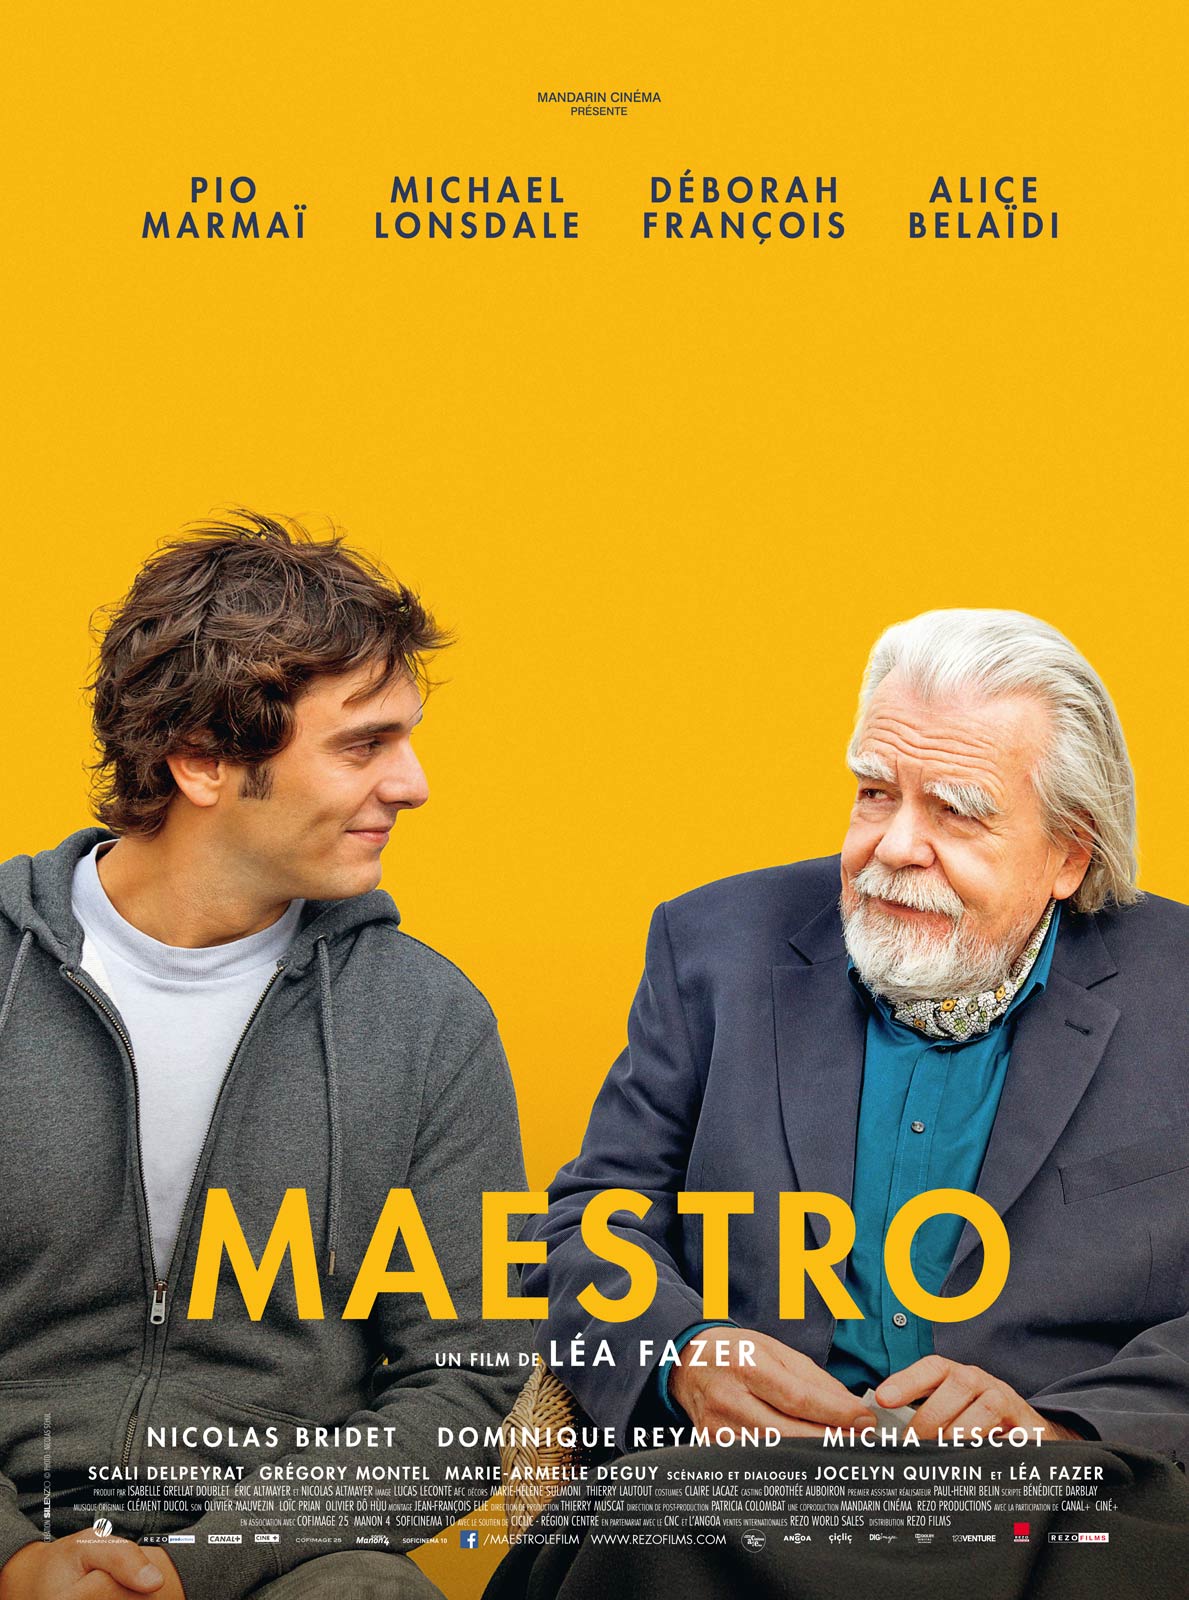 Maestro film 2013 AlloCiné